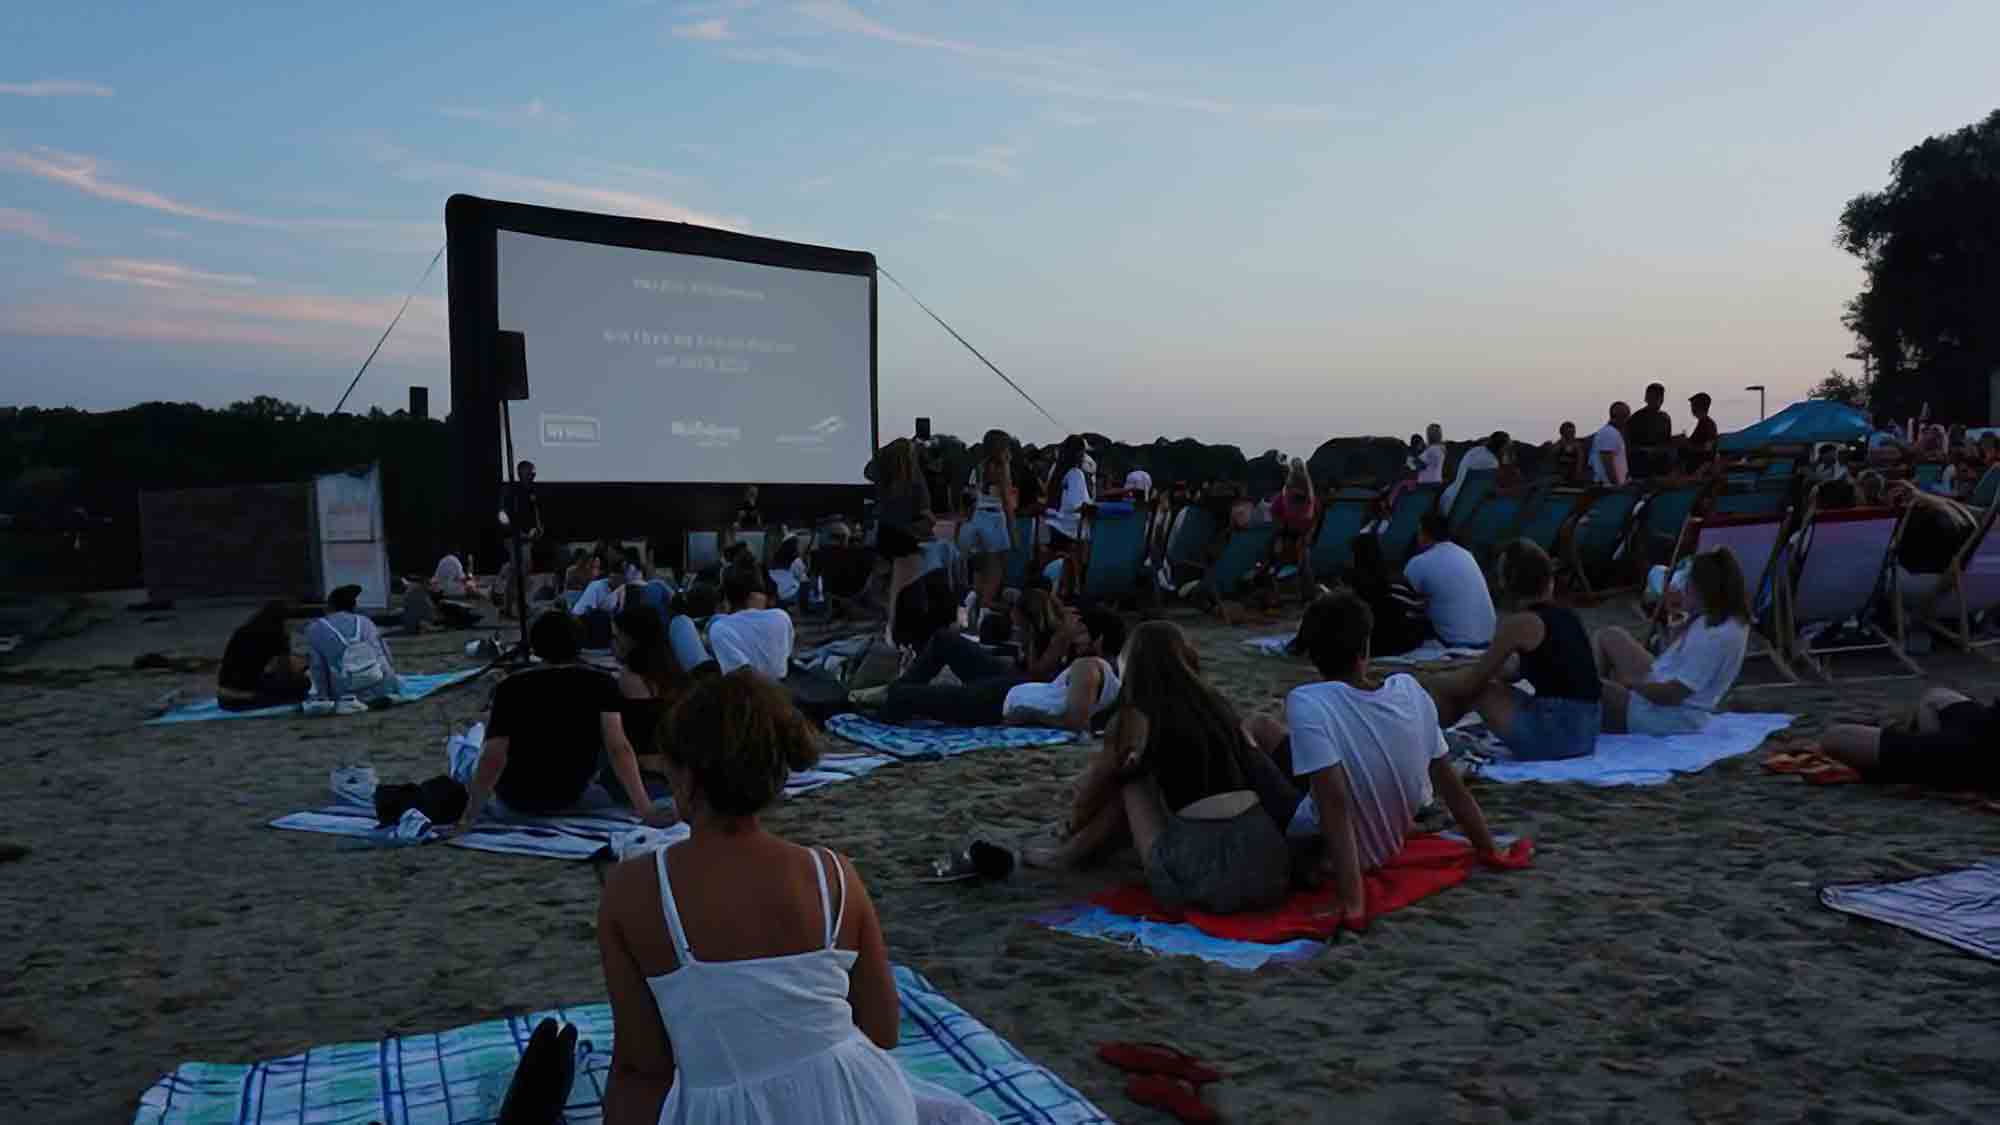 Open Air Kinoerlebnis am Allersee geht weiter, Besucher erwarten Filmhighlights